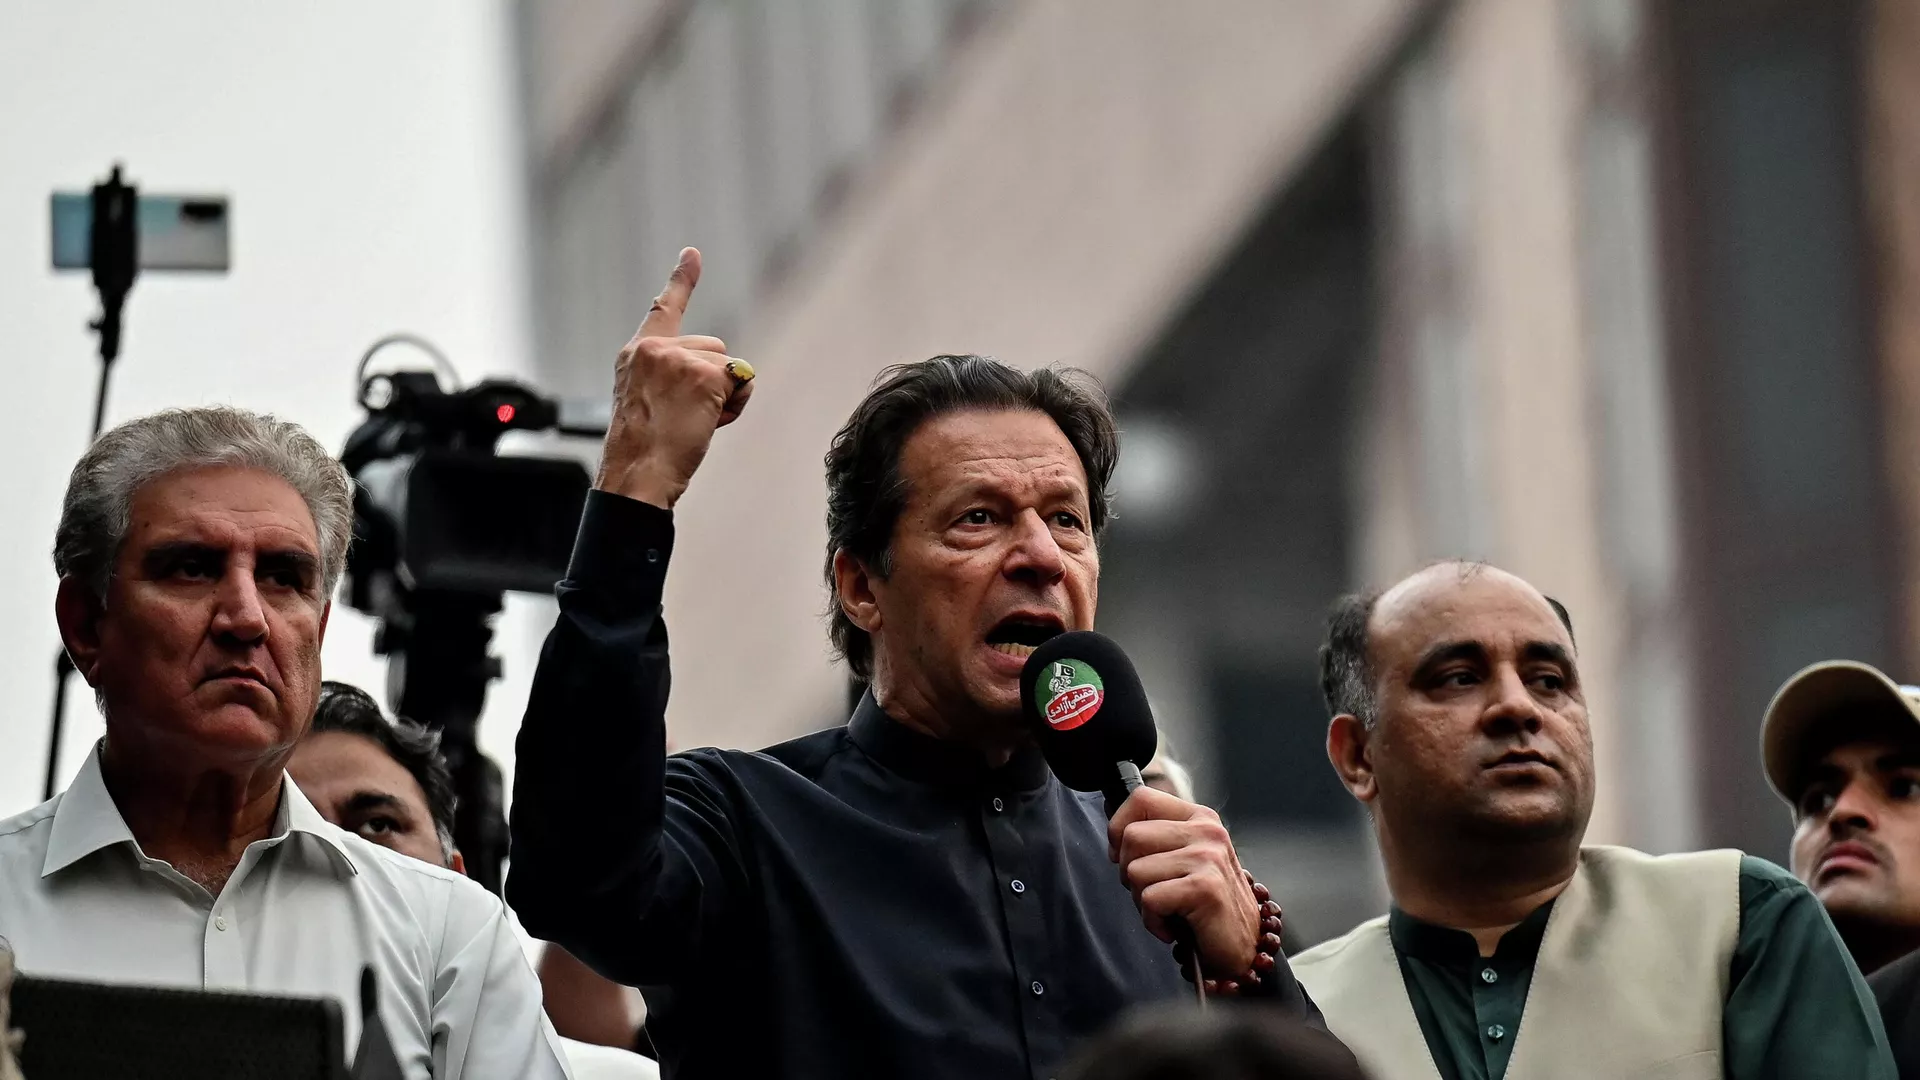 Hieren de bala al ex primer ministro pakistaní Khan durante marcha de protesta